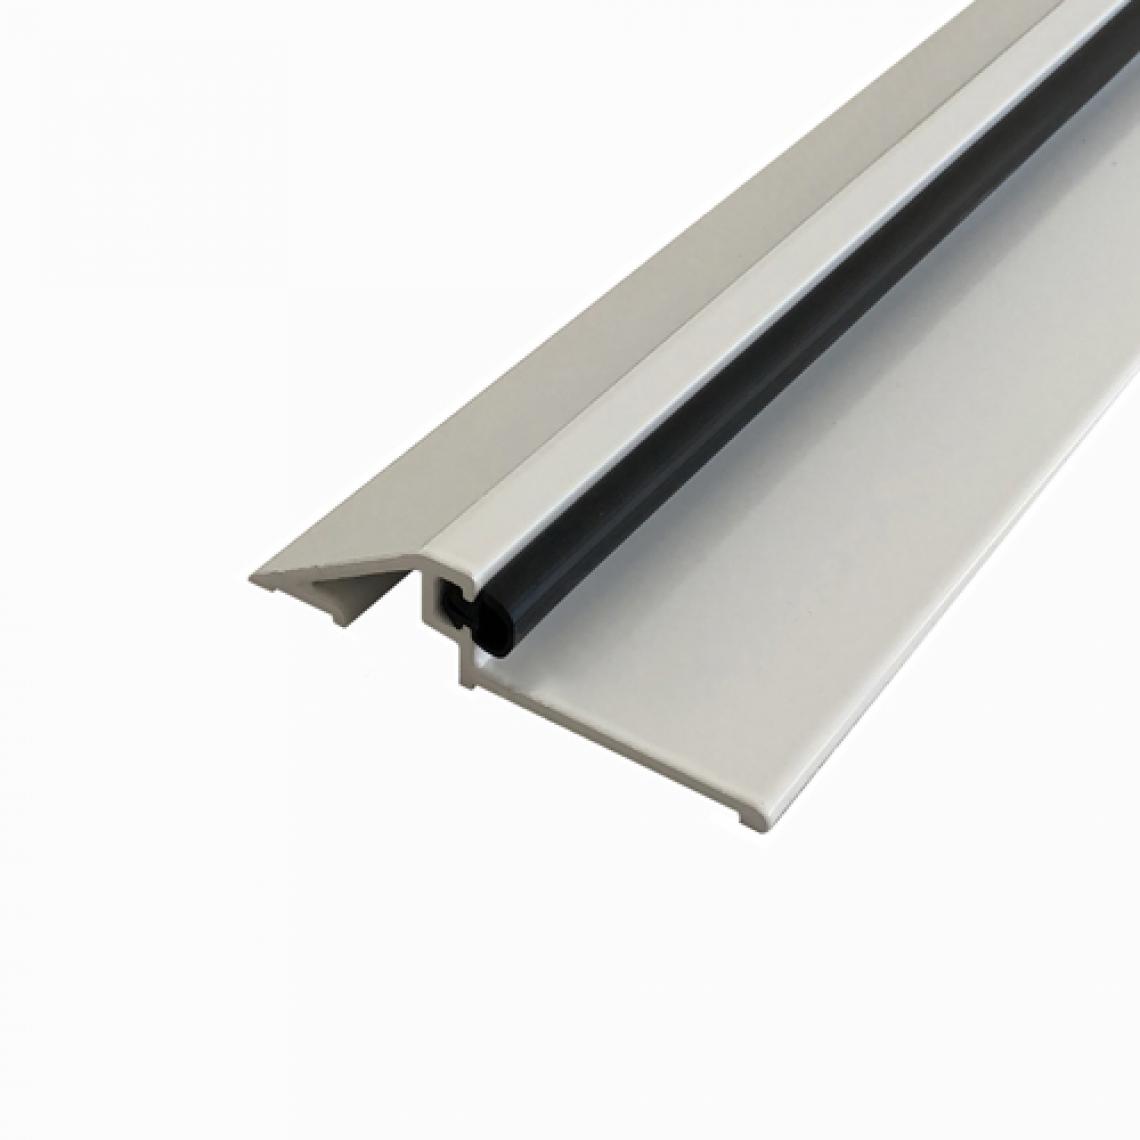 Homewell - Seuil de porte en aluminium avec joint, laqué blanc, 1m - Barre de seuil